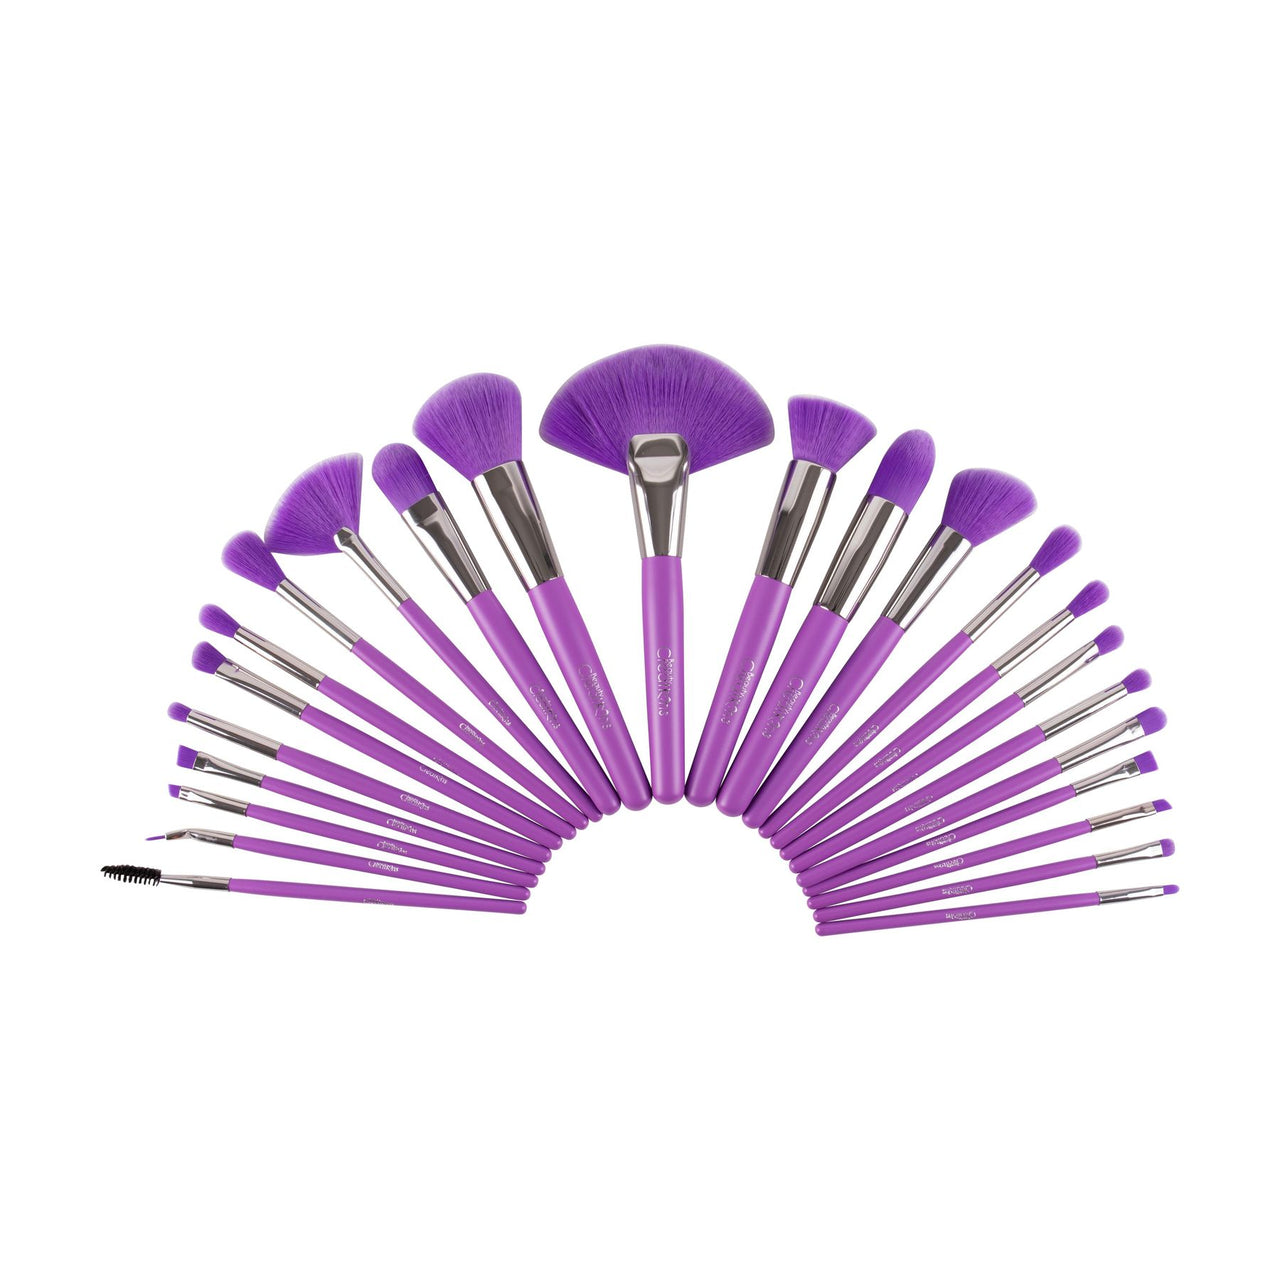 BC-B24NP : The Neon Purple 24 Piece Brush Set 3 PC